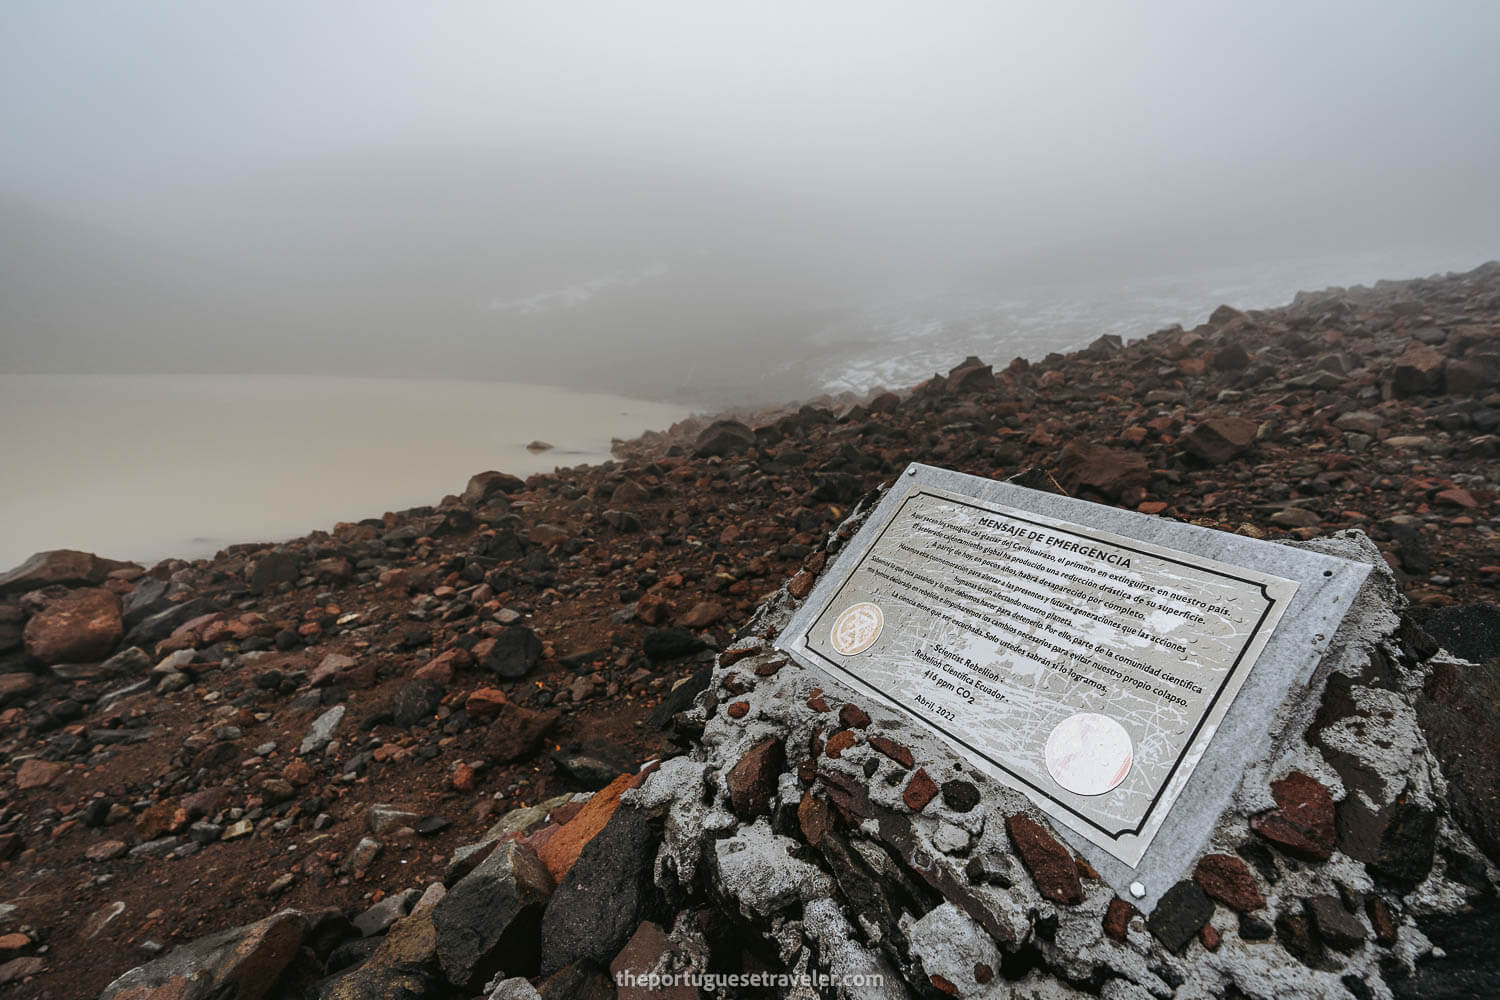 The glacier melting warning sign at the famous Laguna Congelada - Frozen Lagoon